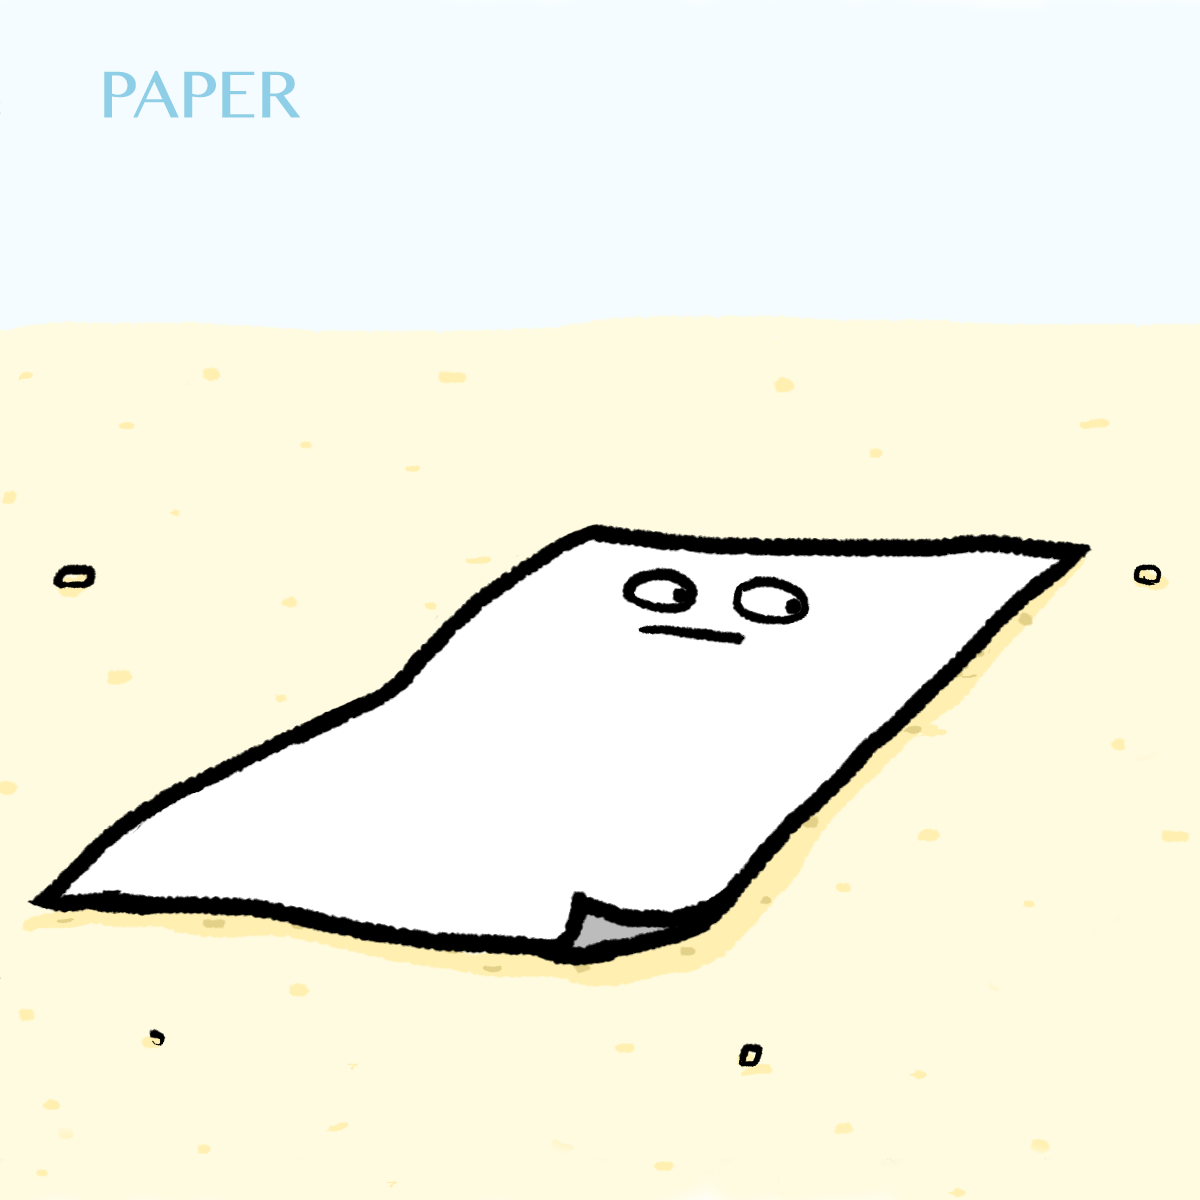 paper